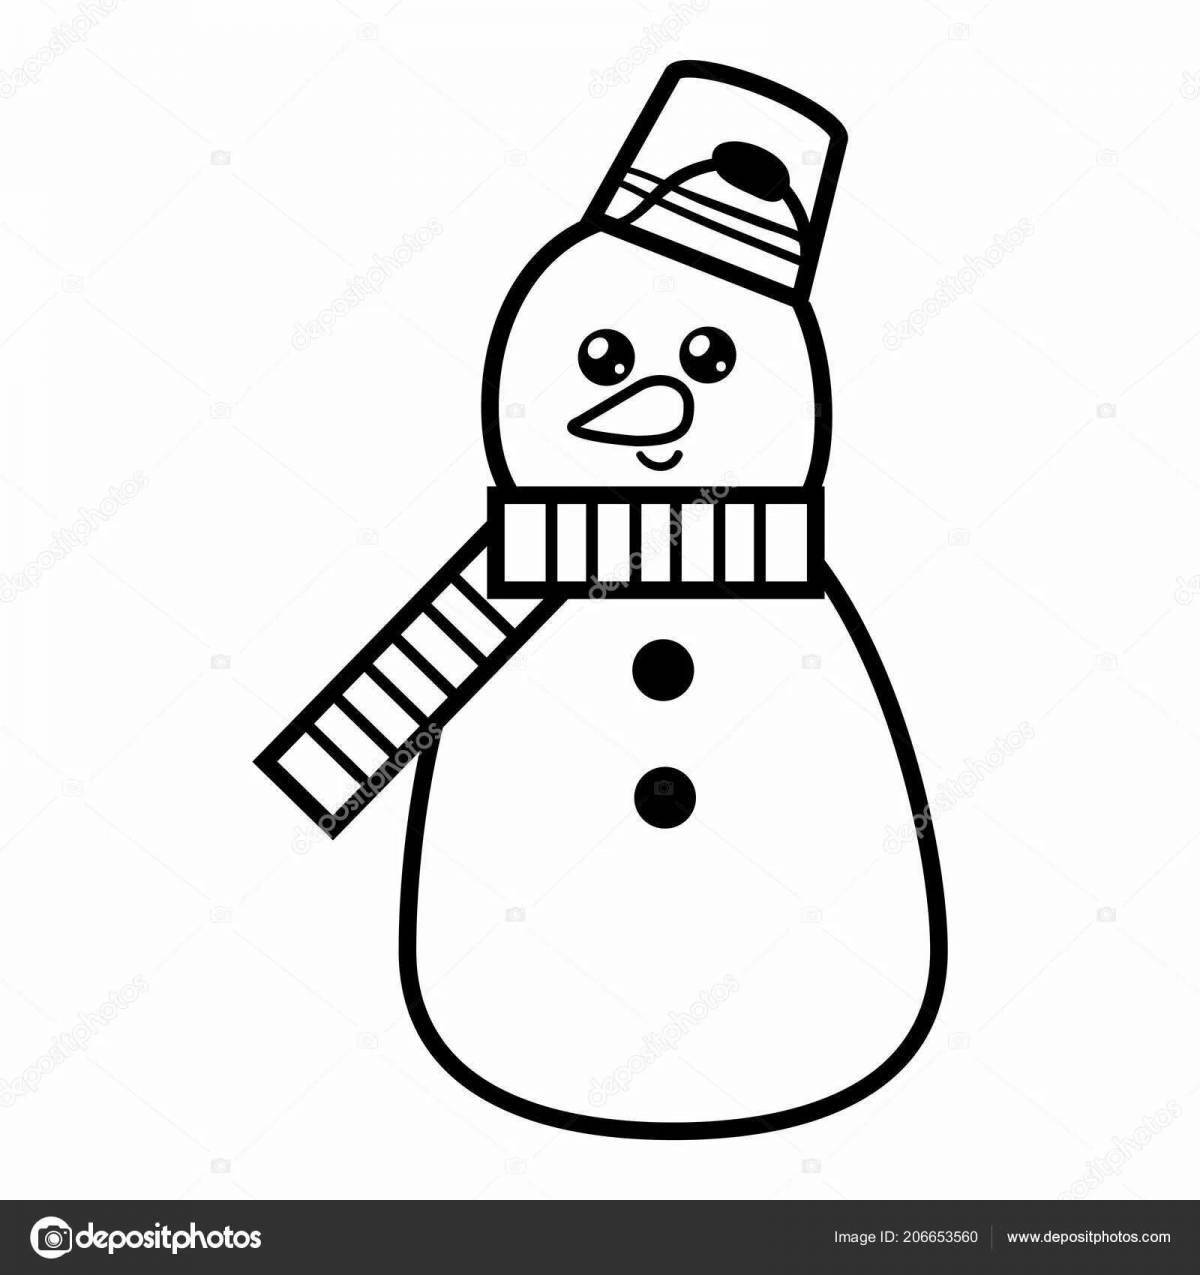 Charming coloring cute snowman